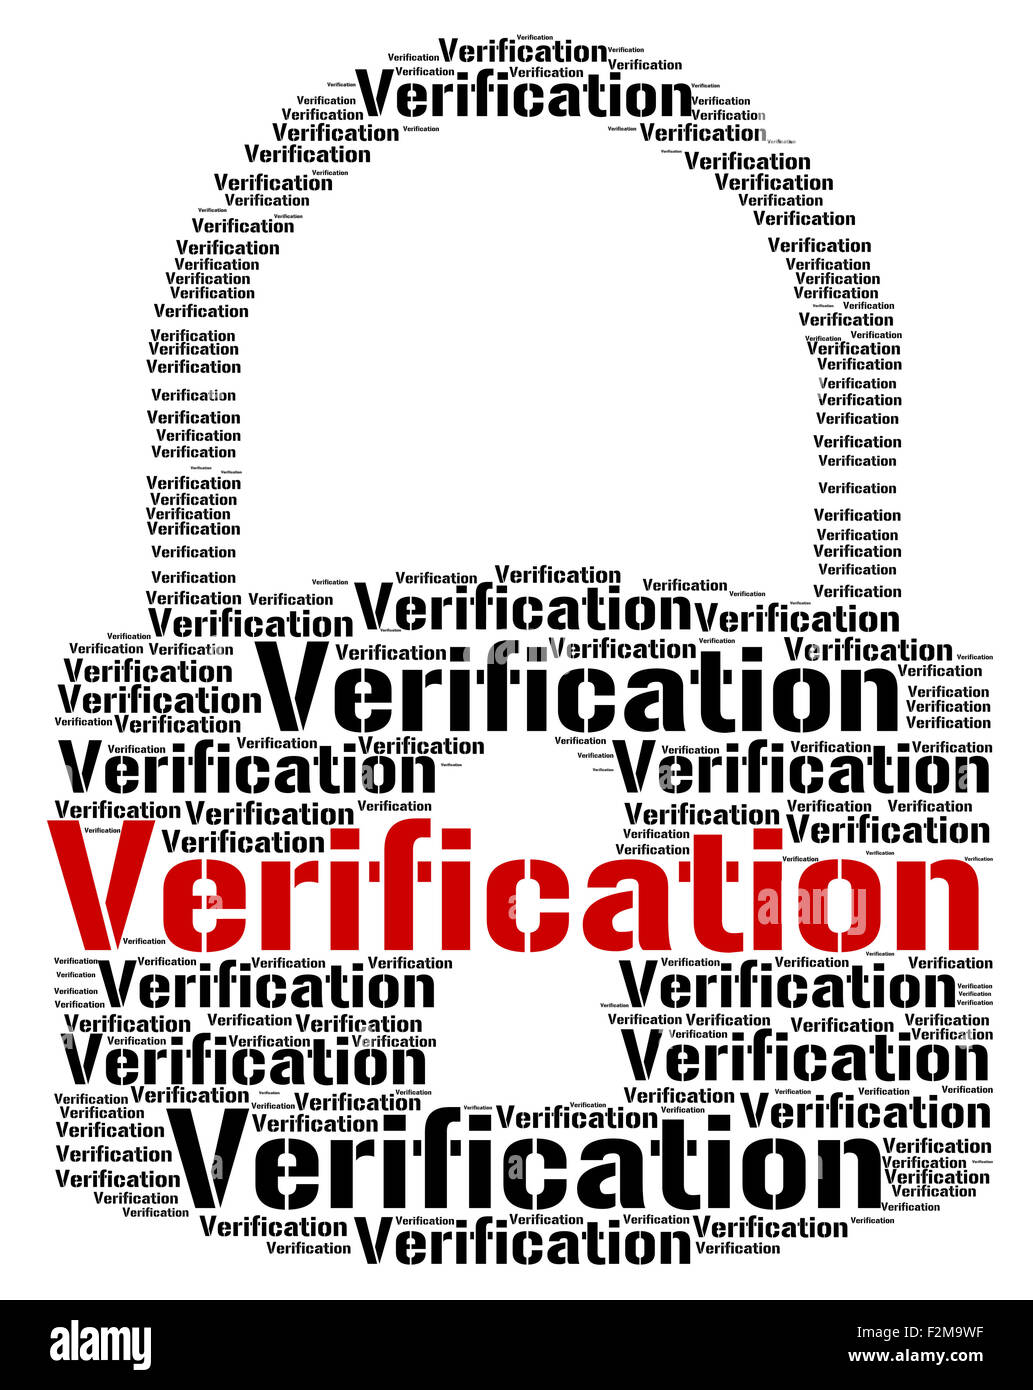 Verification Lock Indicating Authenticity Guaranteed And Warranty Stock Photo